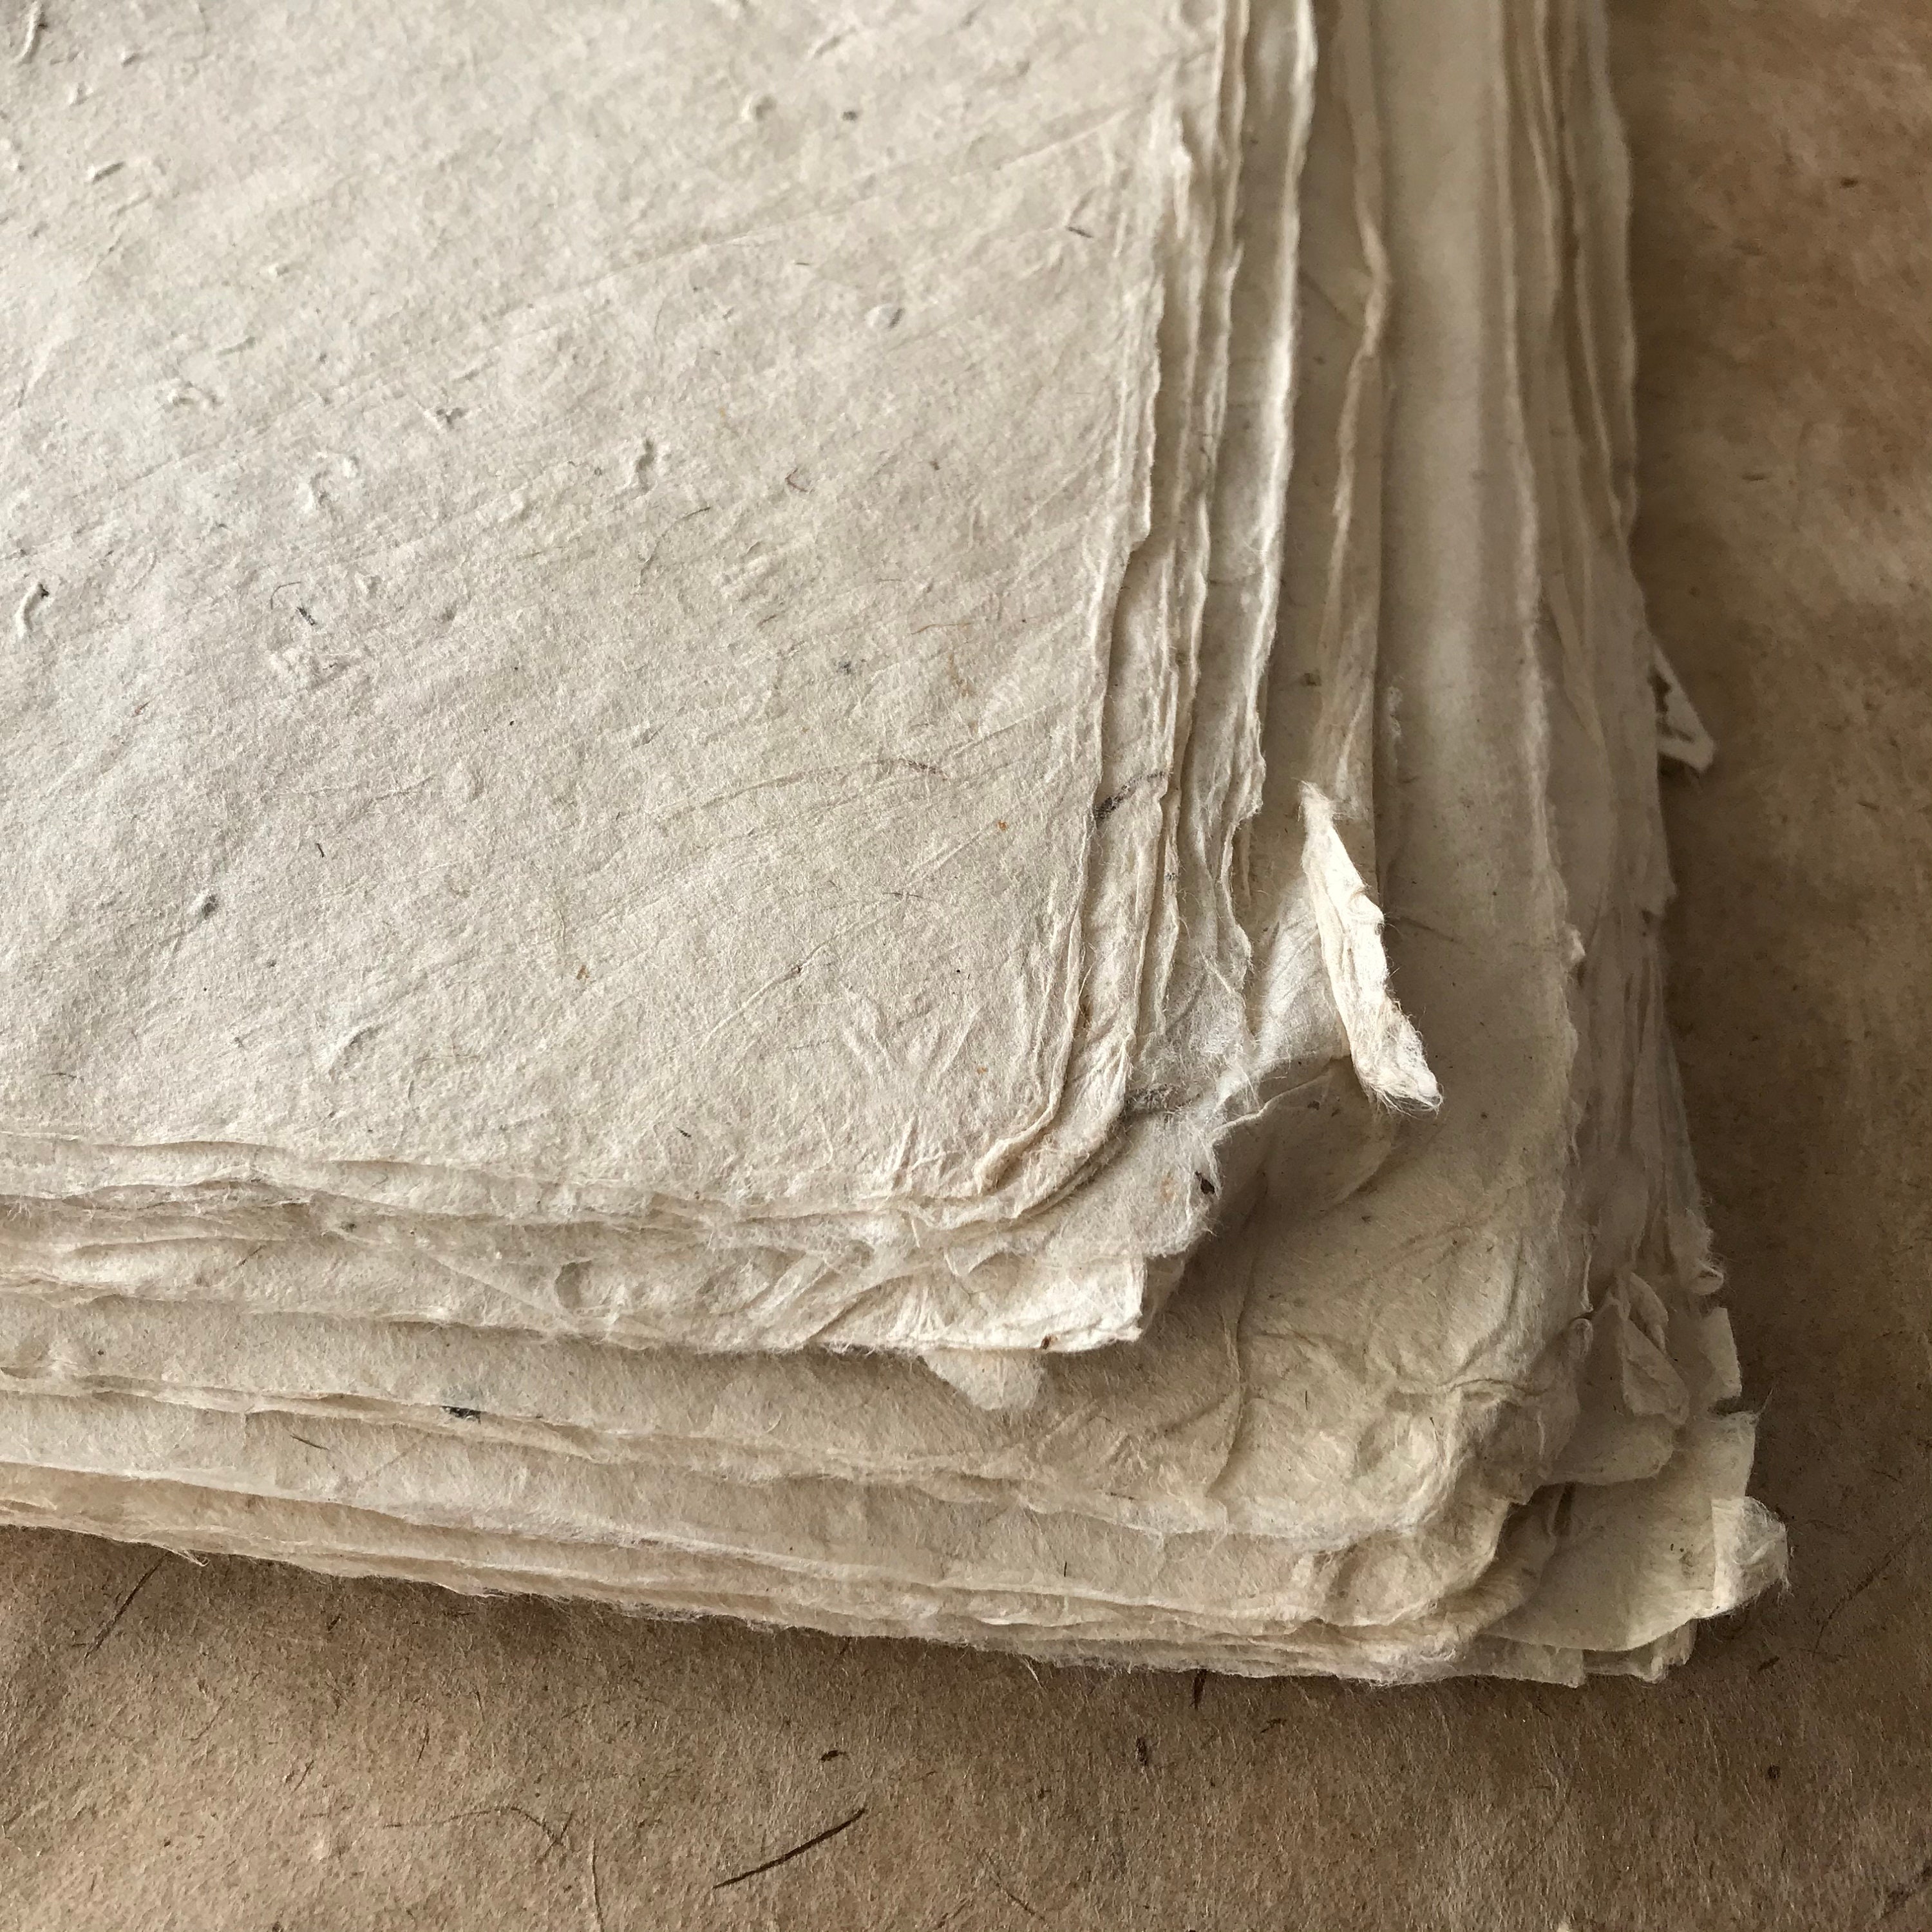 20 X A7 Cotton Rag, 150gsm Khadi White Handmade Paper, 7 X 10cm